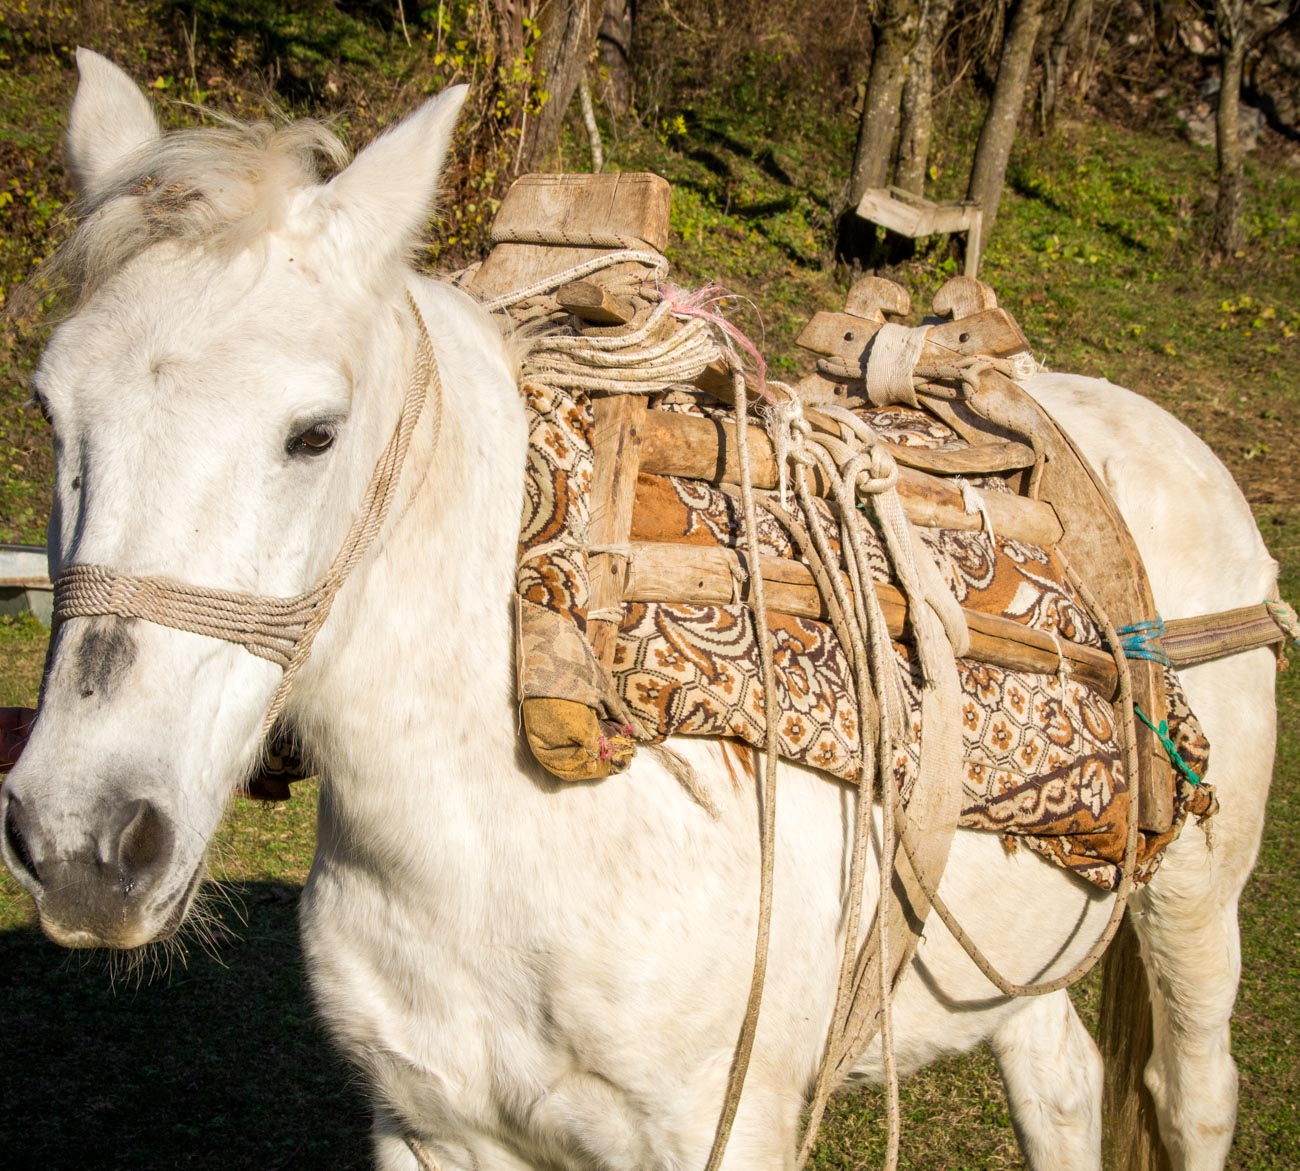 Dedushi Guest House in Prokletije for horseback trail riding